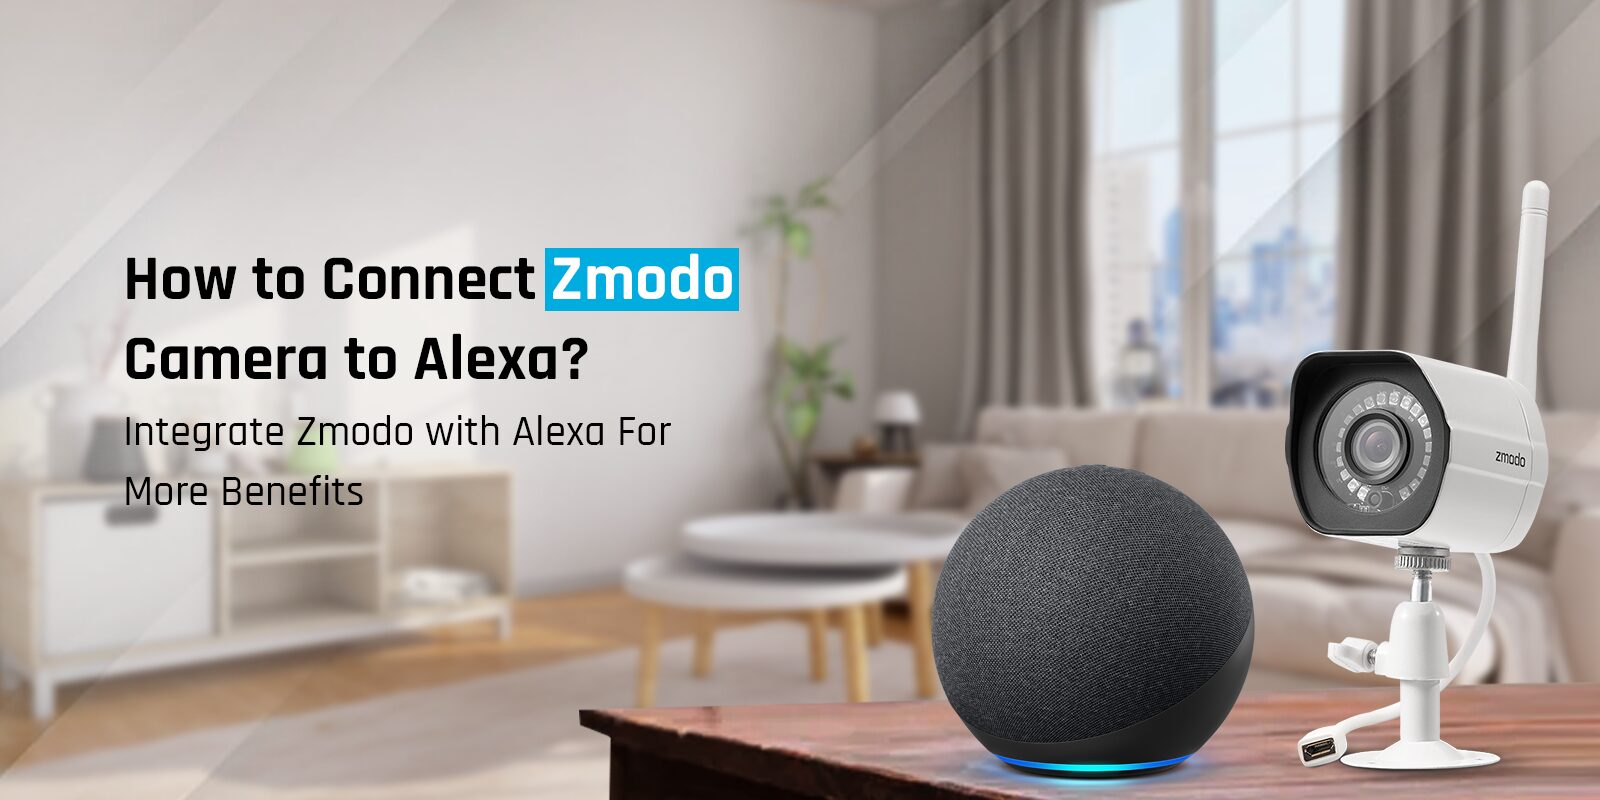 Connect Zmodo camera to Alexa